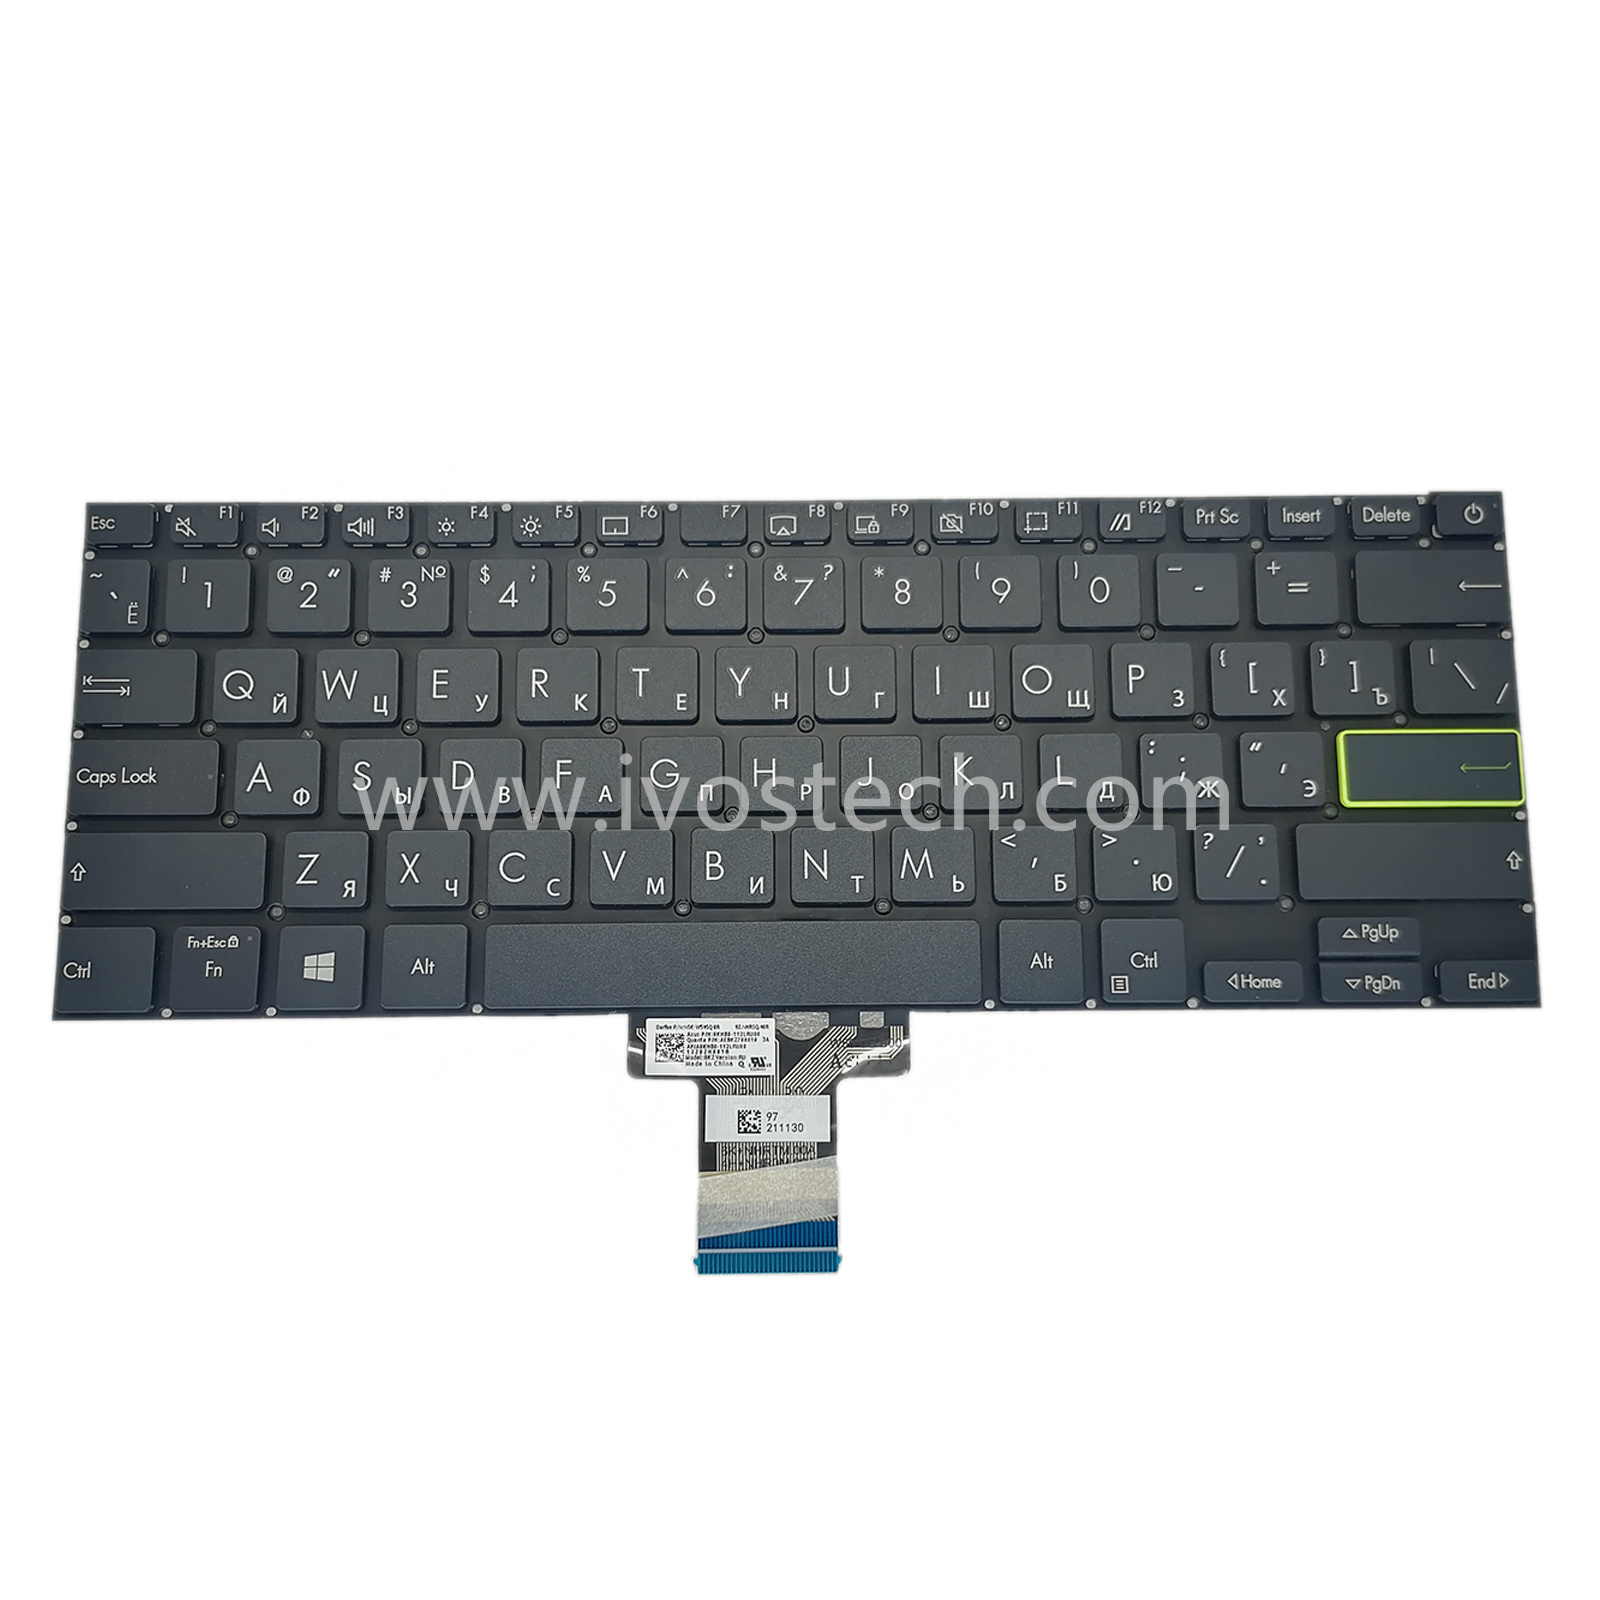 0KNB0-112LRU00 Laptop Replacement Keyboard for ASUS X321 – Russian Standard